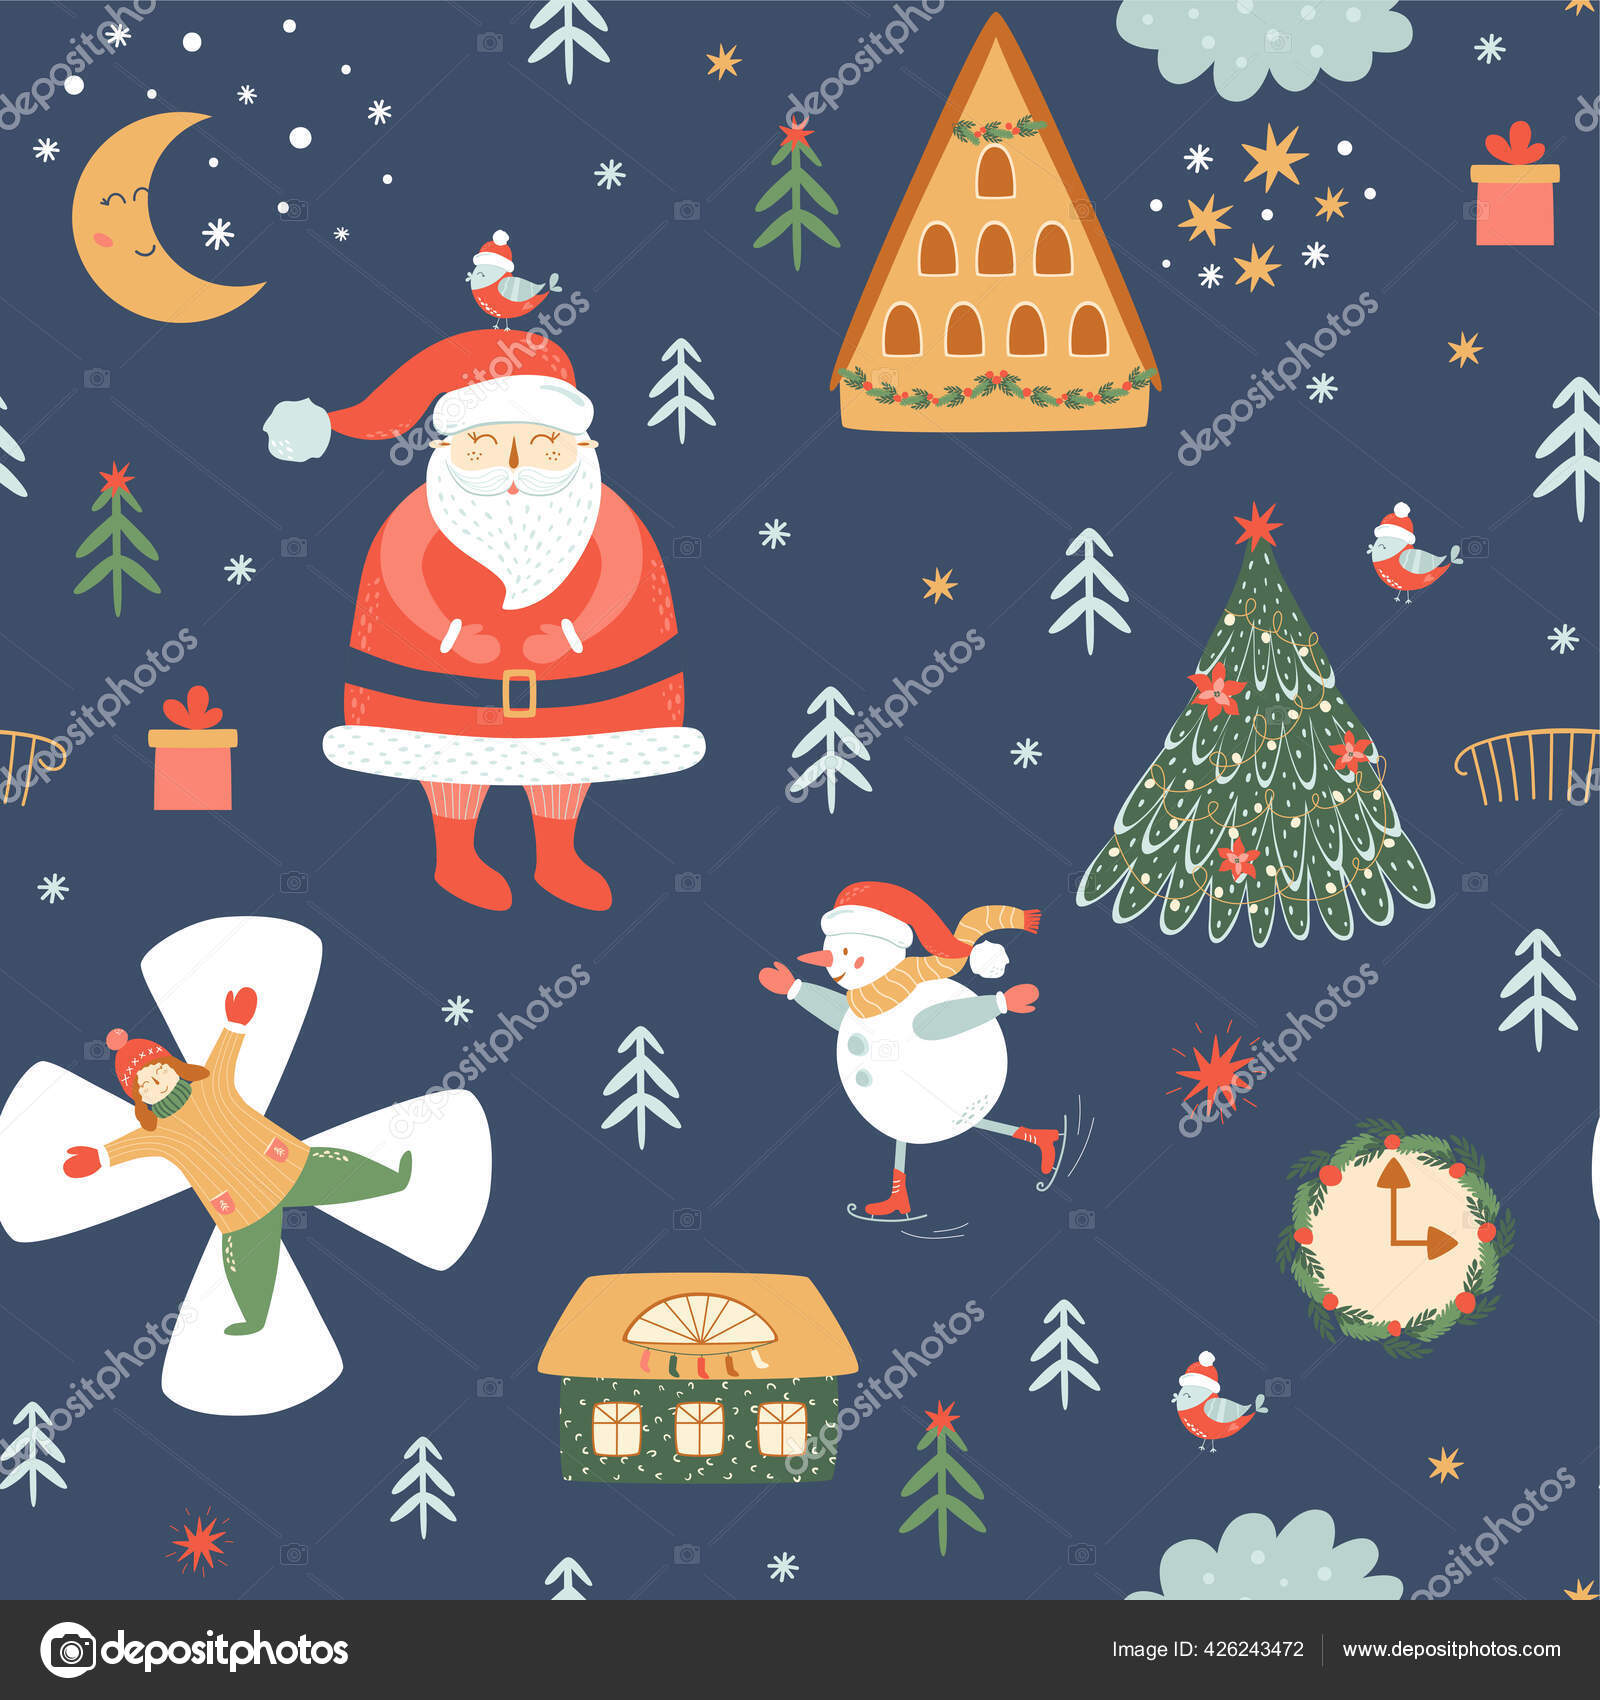 https://st2.depositphotos.com/1963019/42624/i/1600/depositphotos_426243472-stock-illustration-kids-christmas-wallpaper-santa-winter.jpg